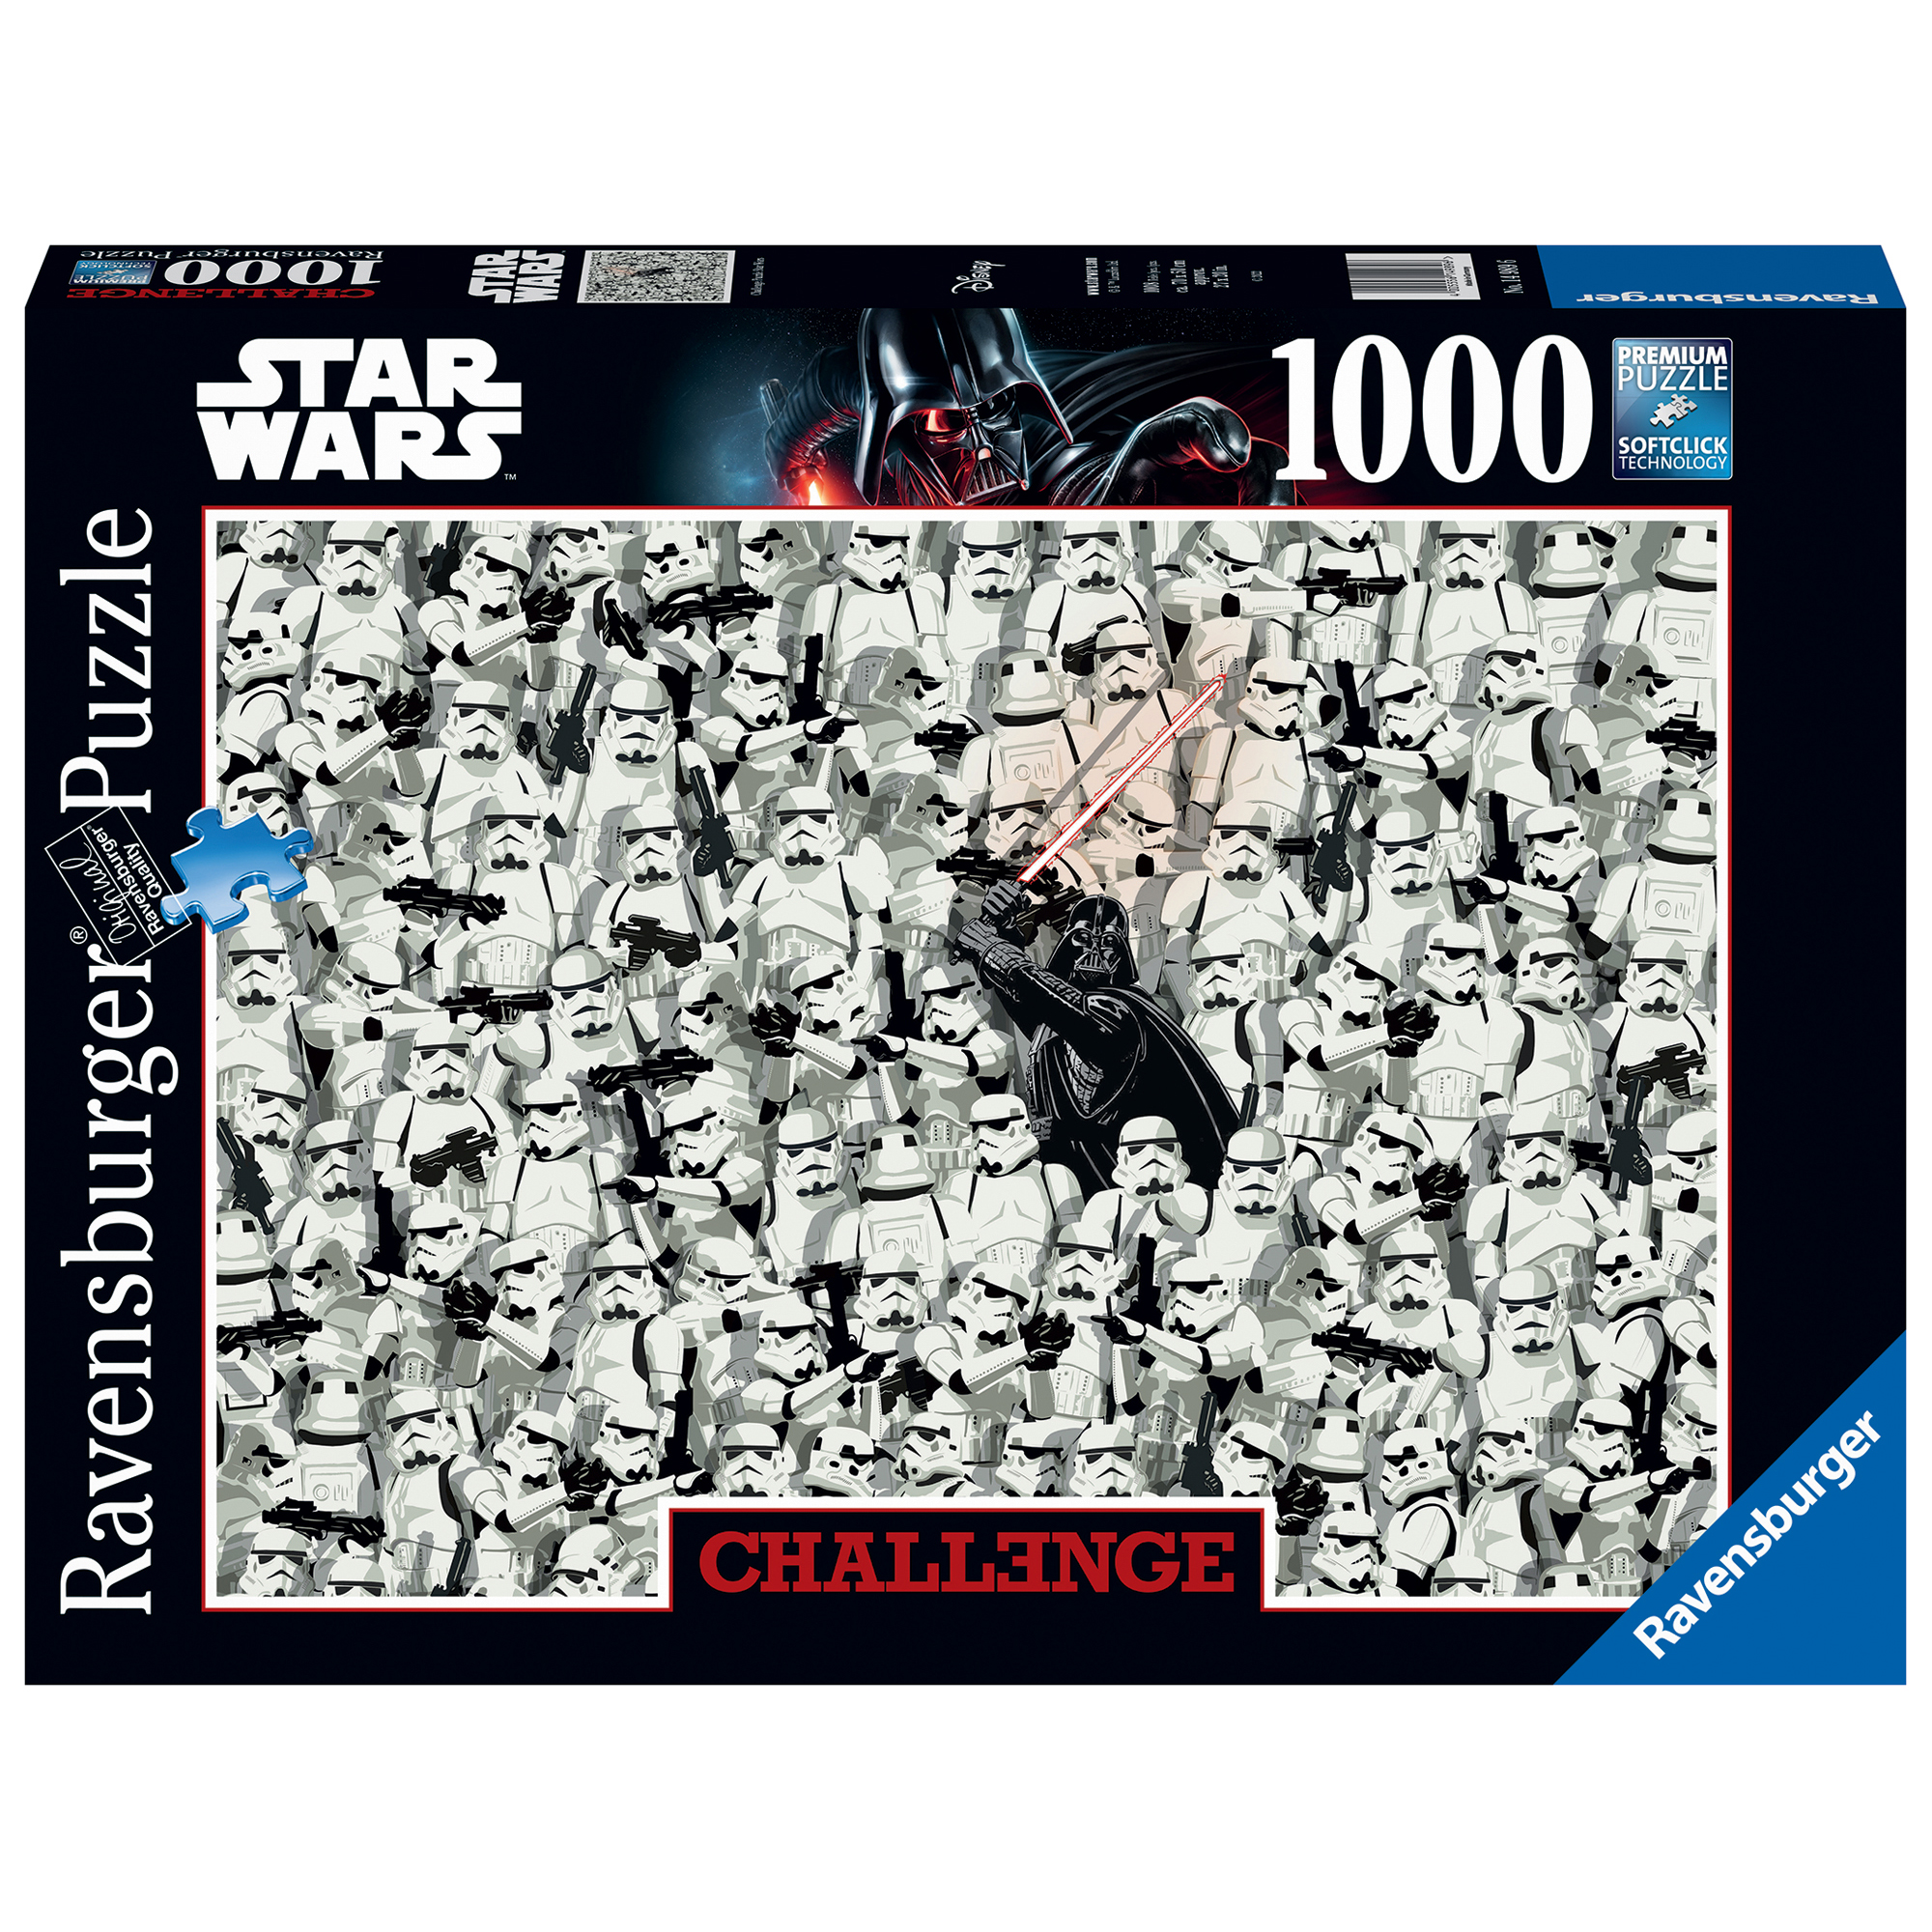 Ravensburger puzzle Star Wars Challenge 1000 pezzi - Ravensburger, Star Wars